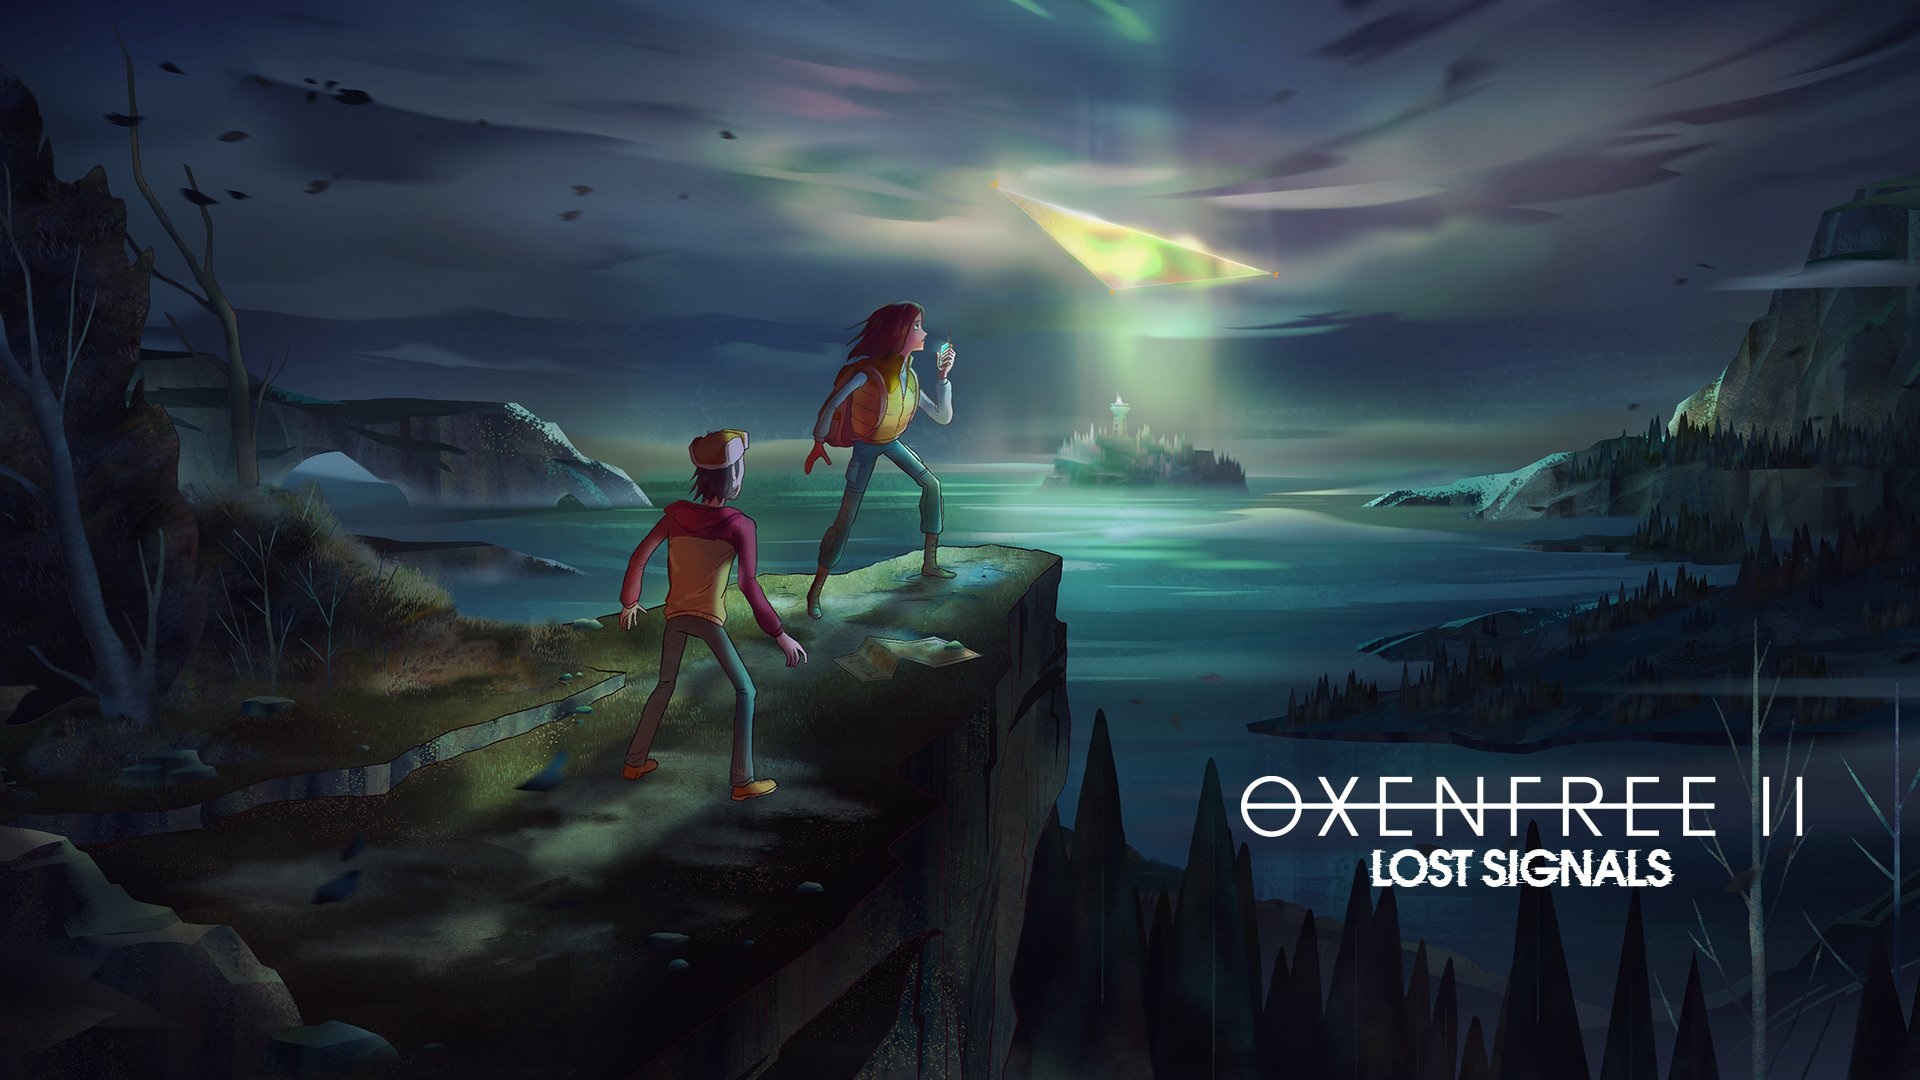 تاریخ عرضه Oxenfree 2: Lost Signals رسما اعلام شد